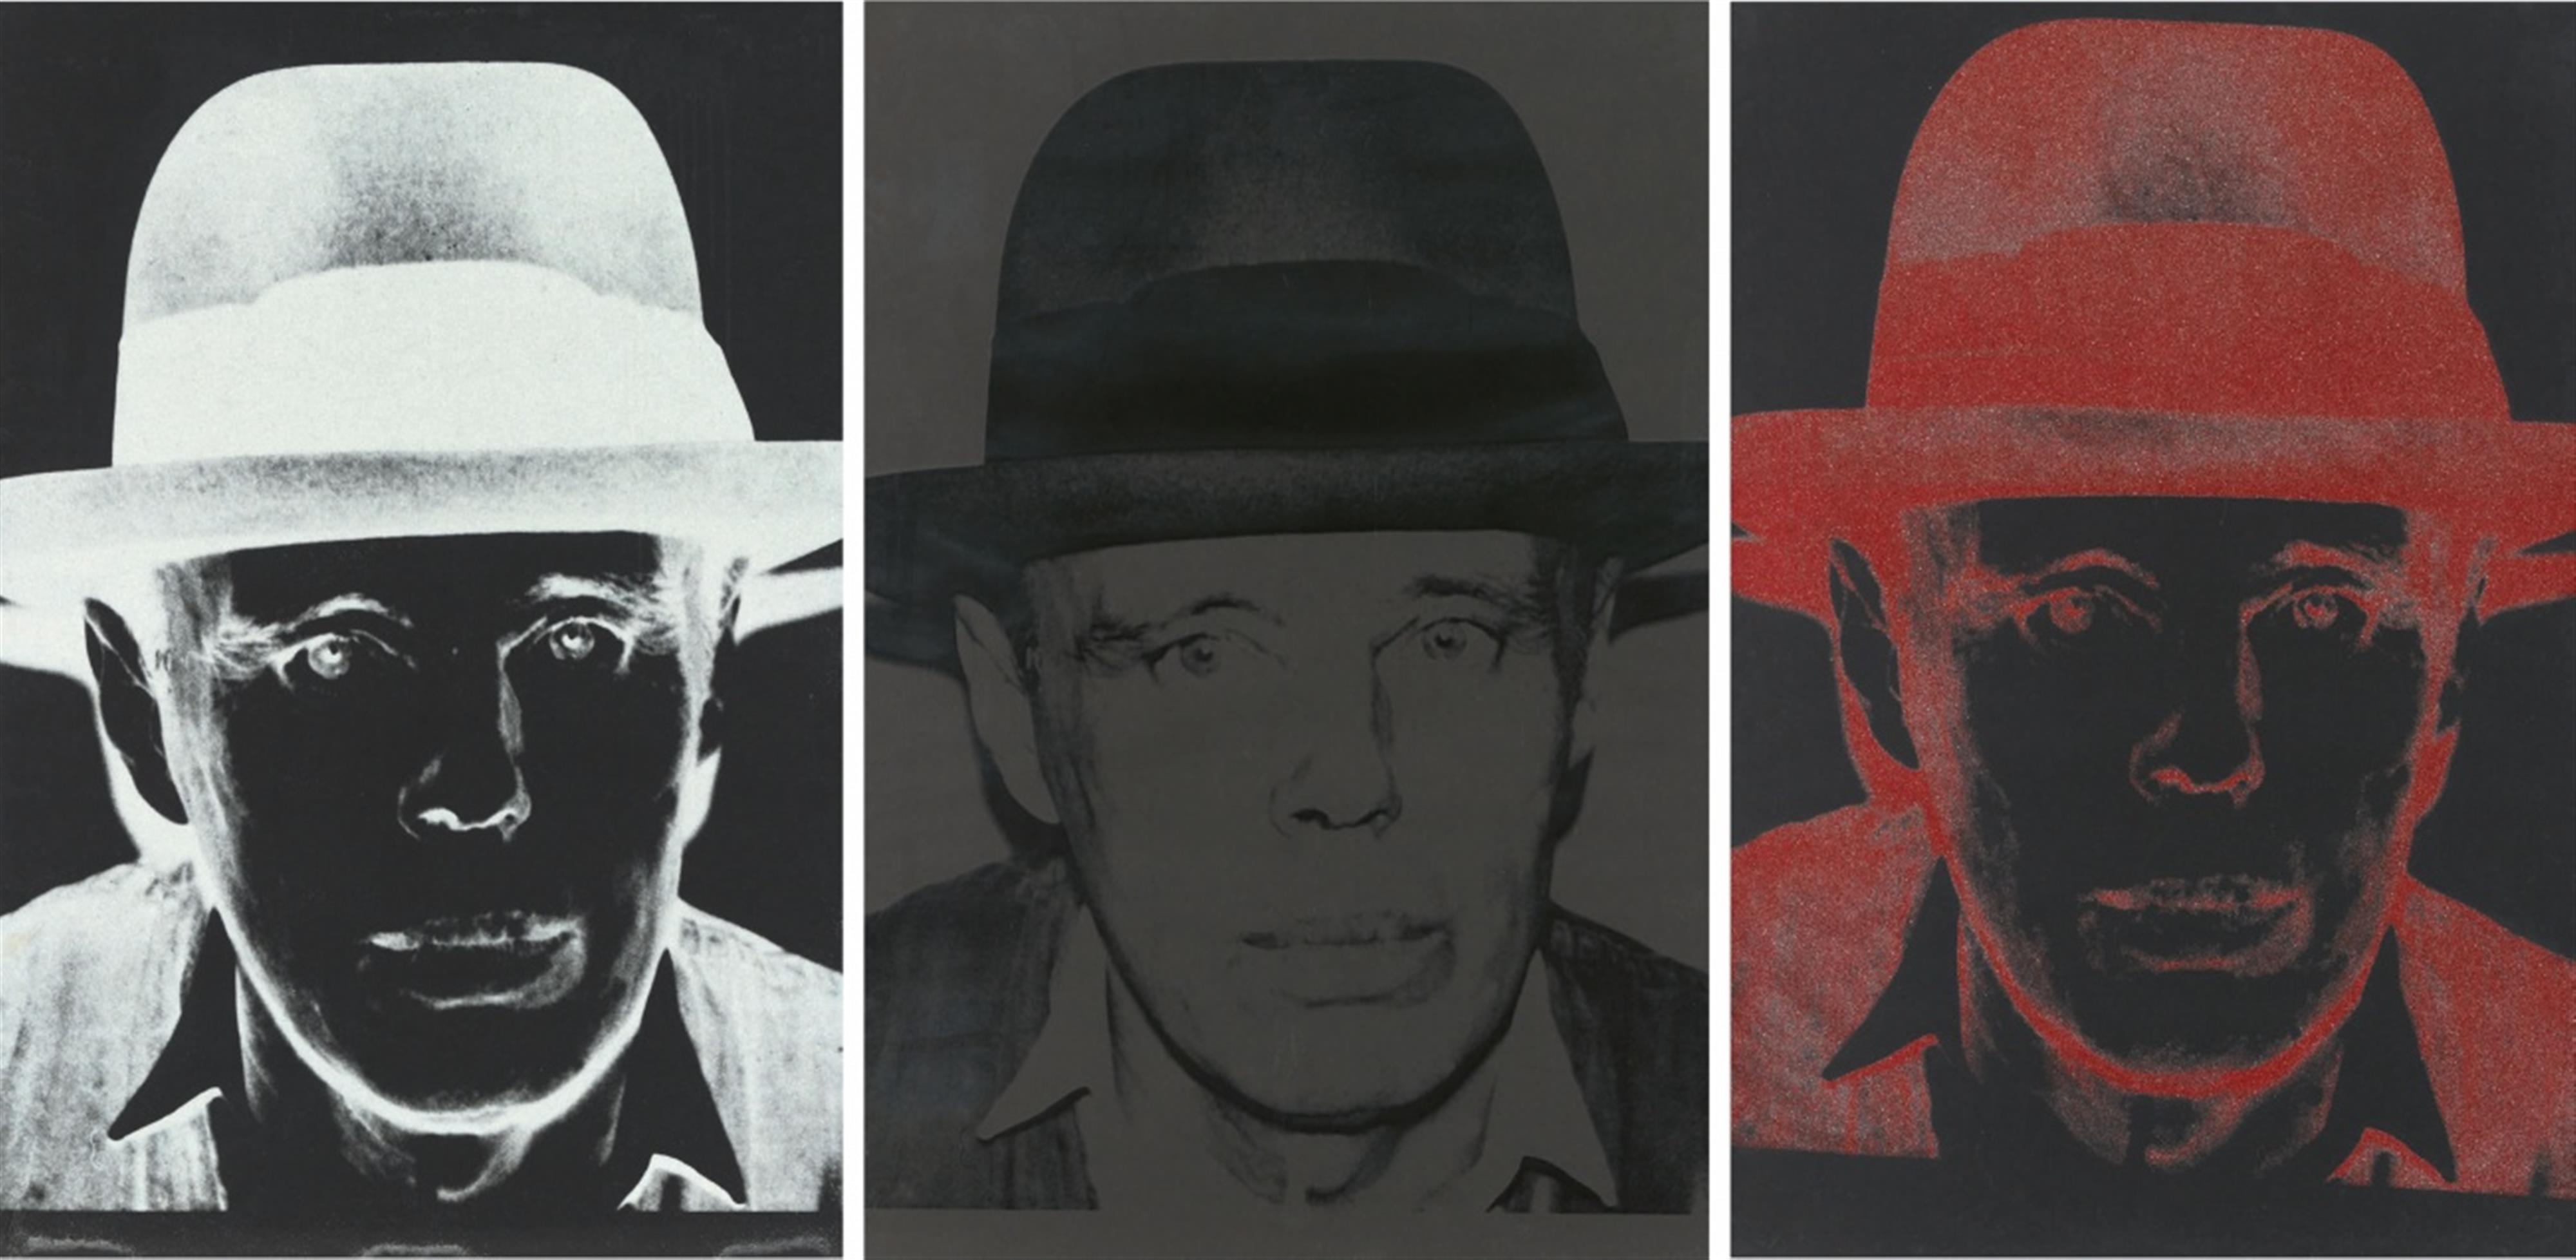 Andy Warhol - Joseph Beuys - image-1